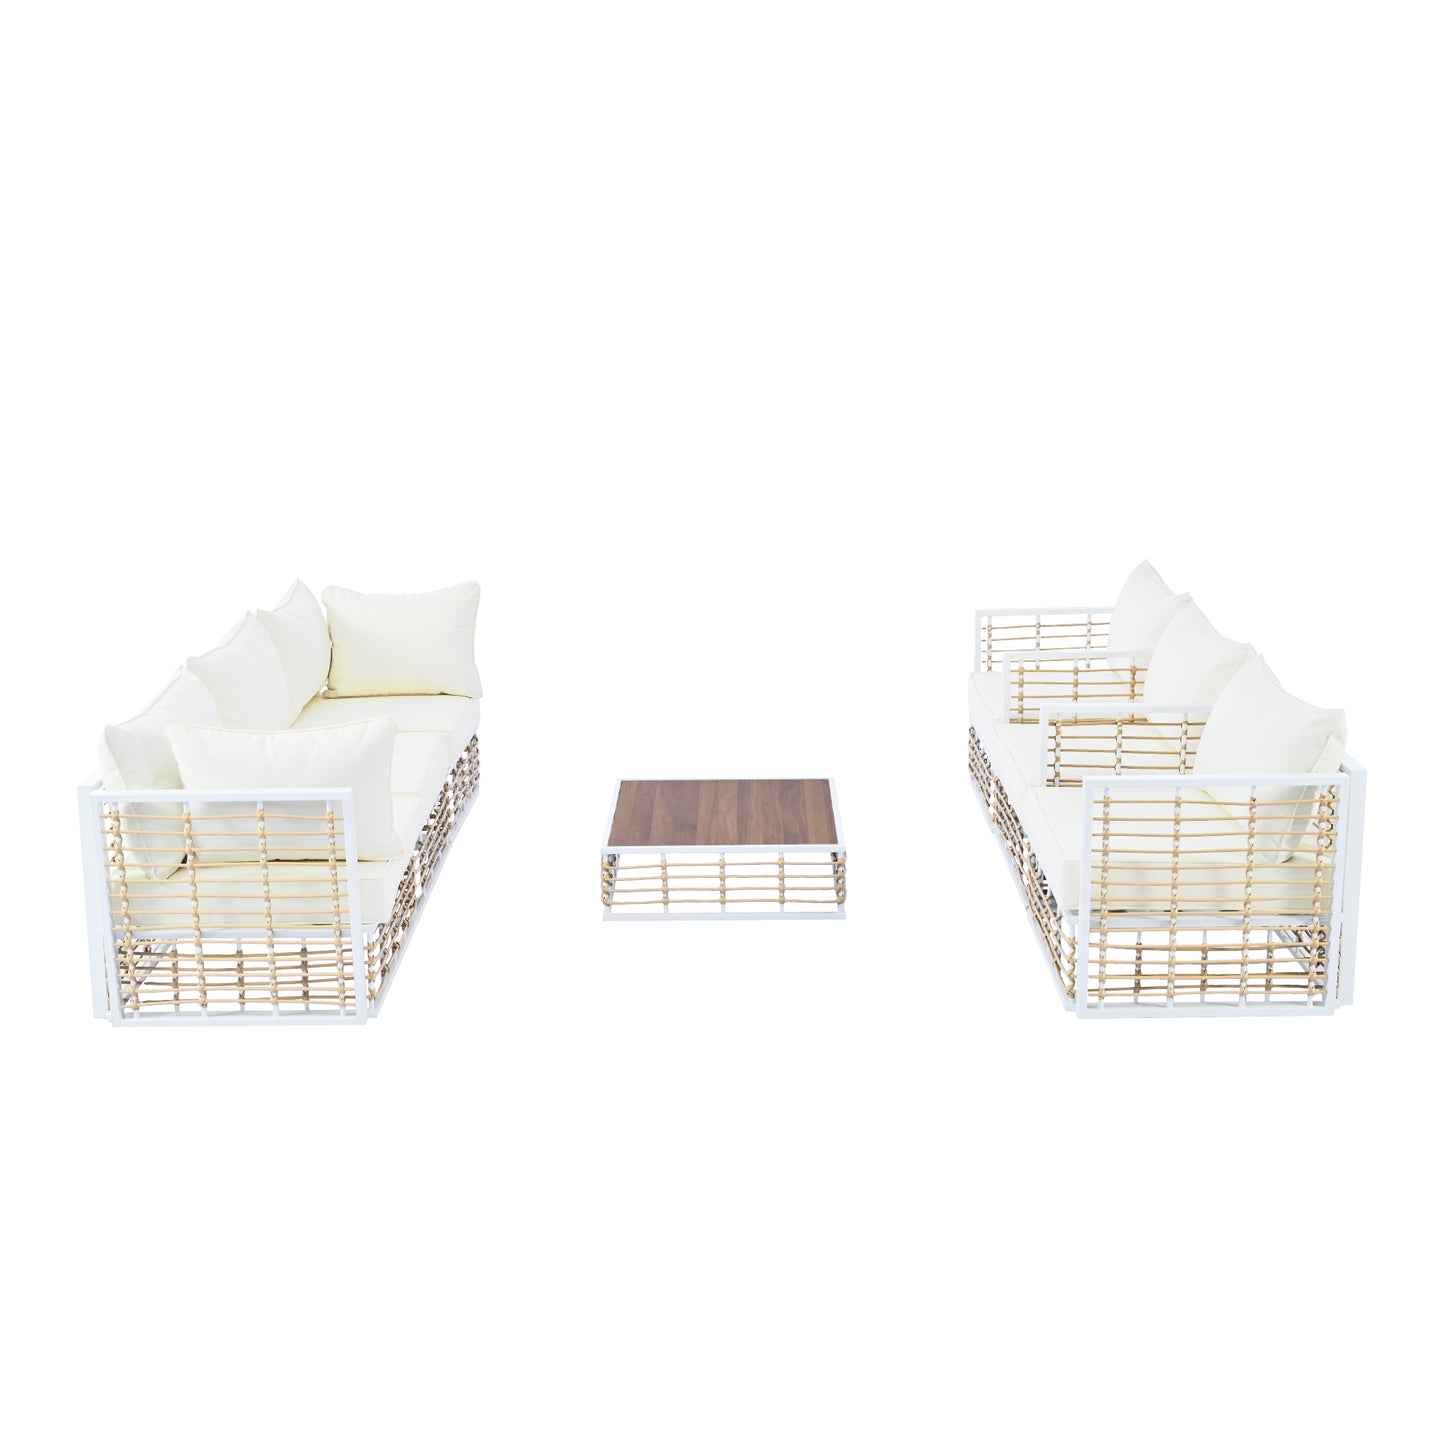 Modern Minimalist 7-Piece Metal Patio Sectional Sofa Set